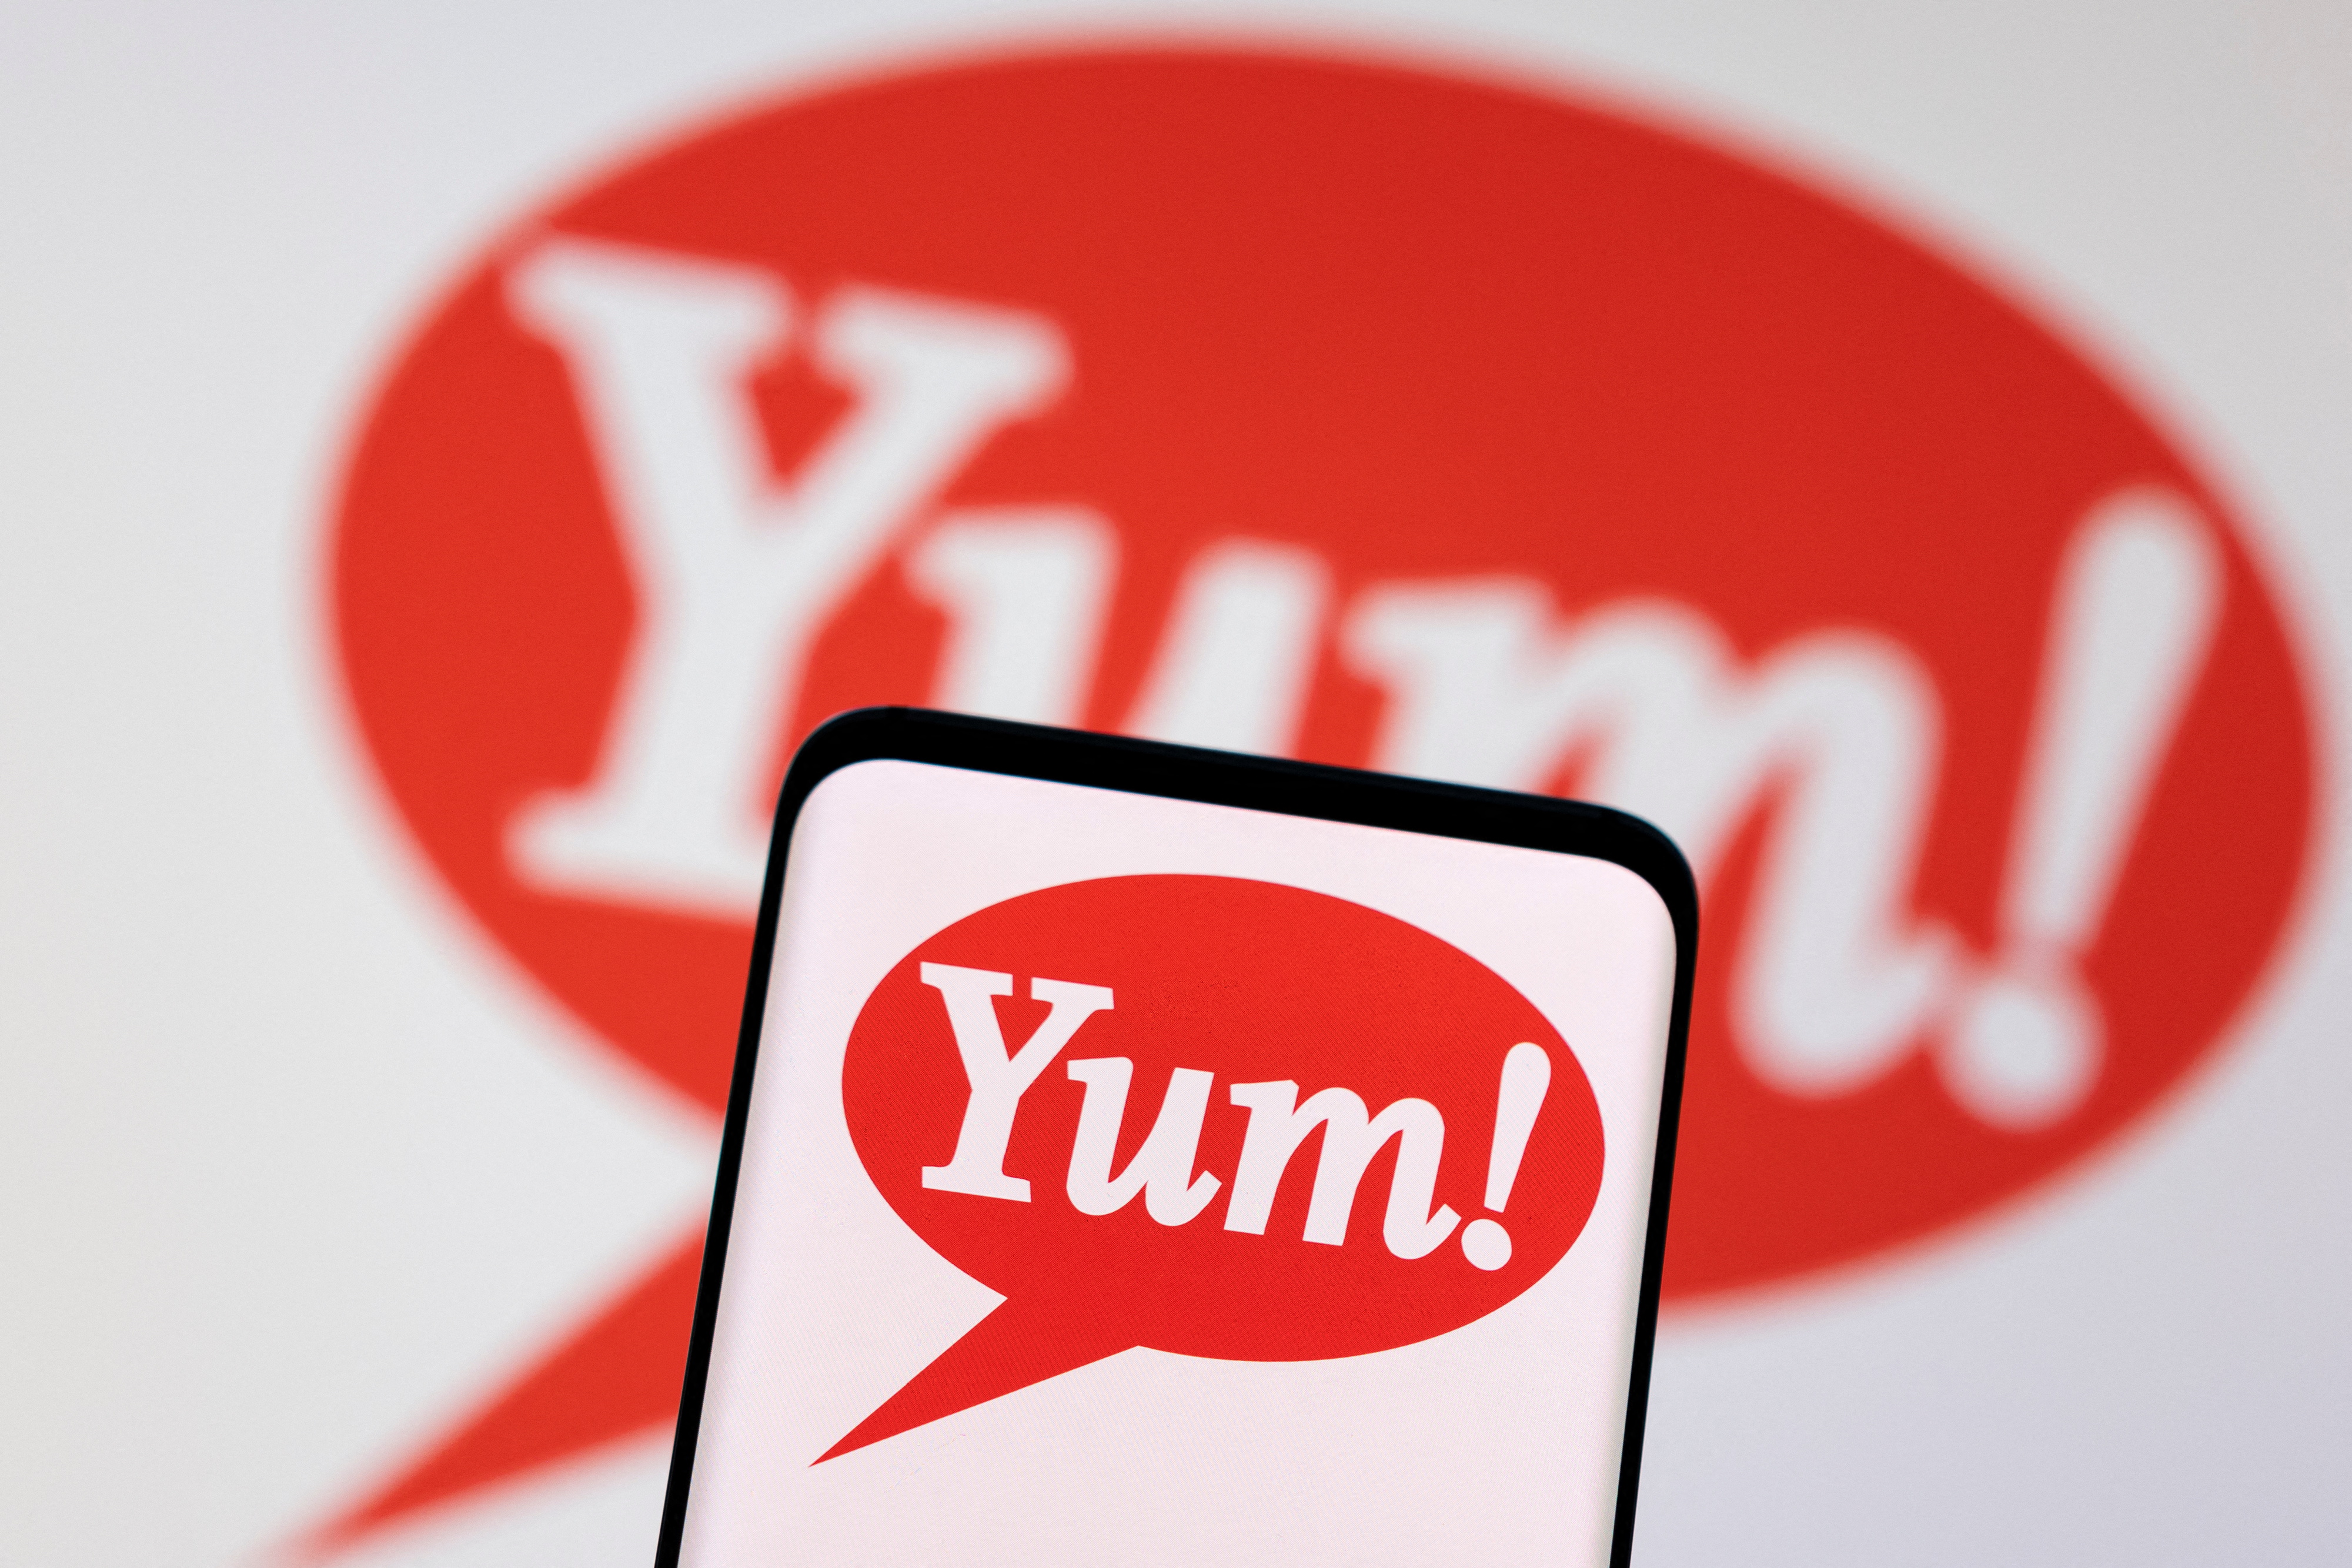 Illustration shows Yum Brands logo